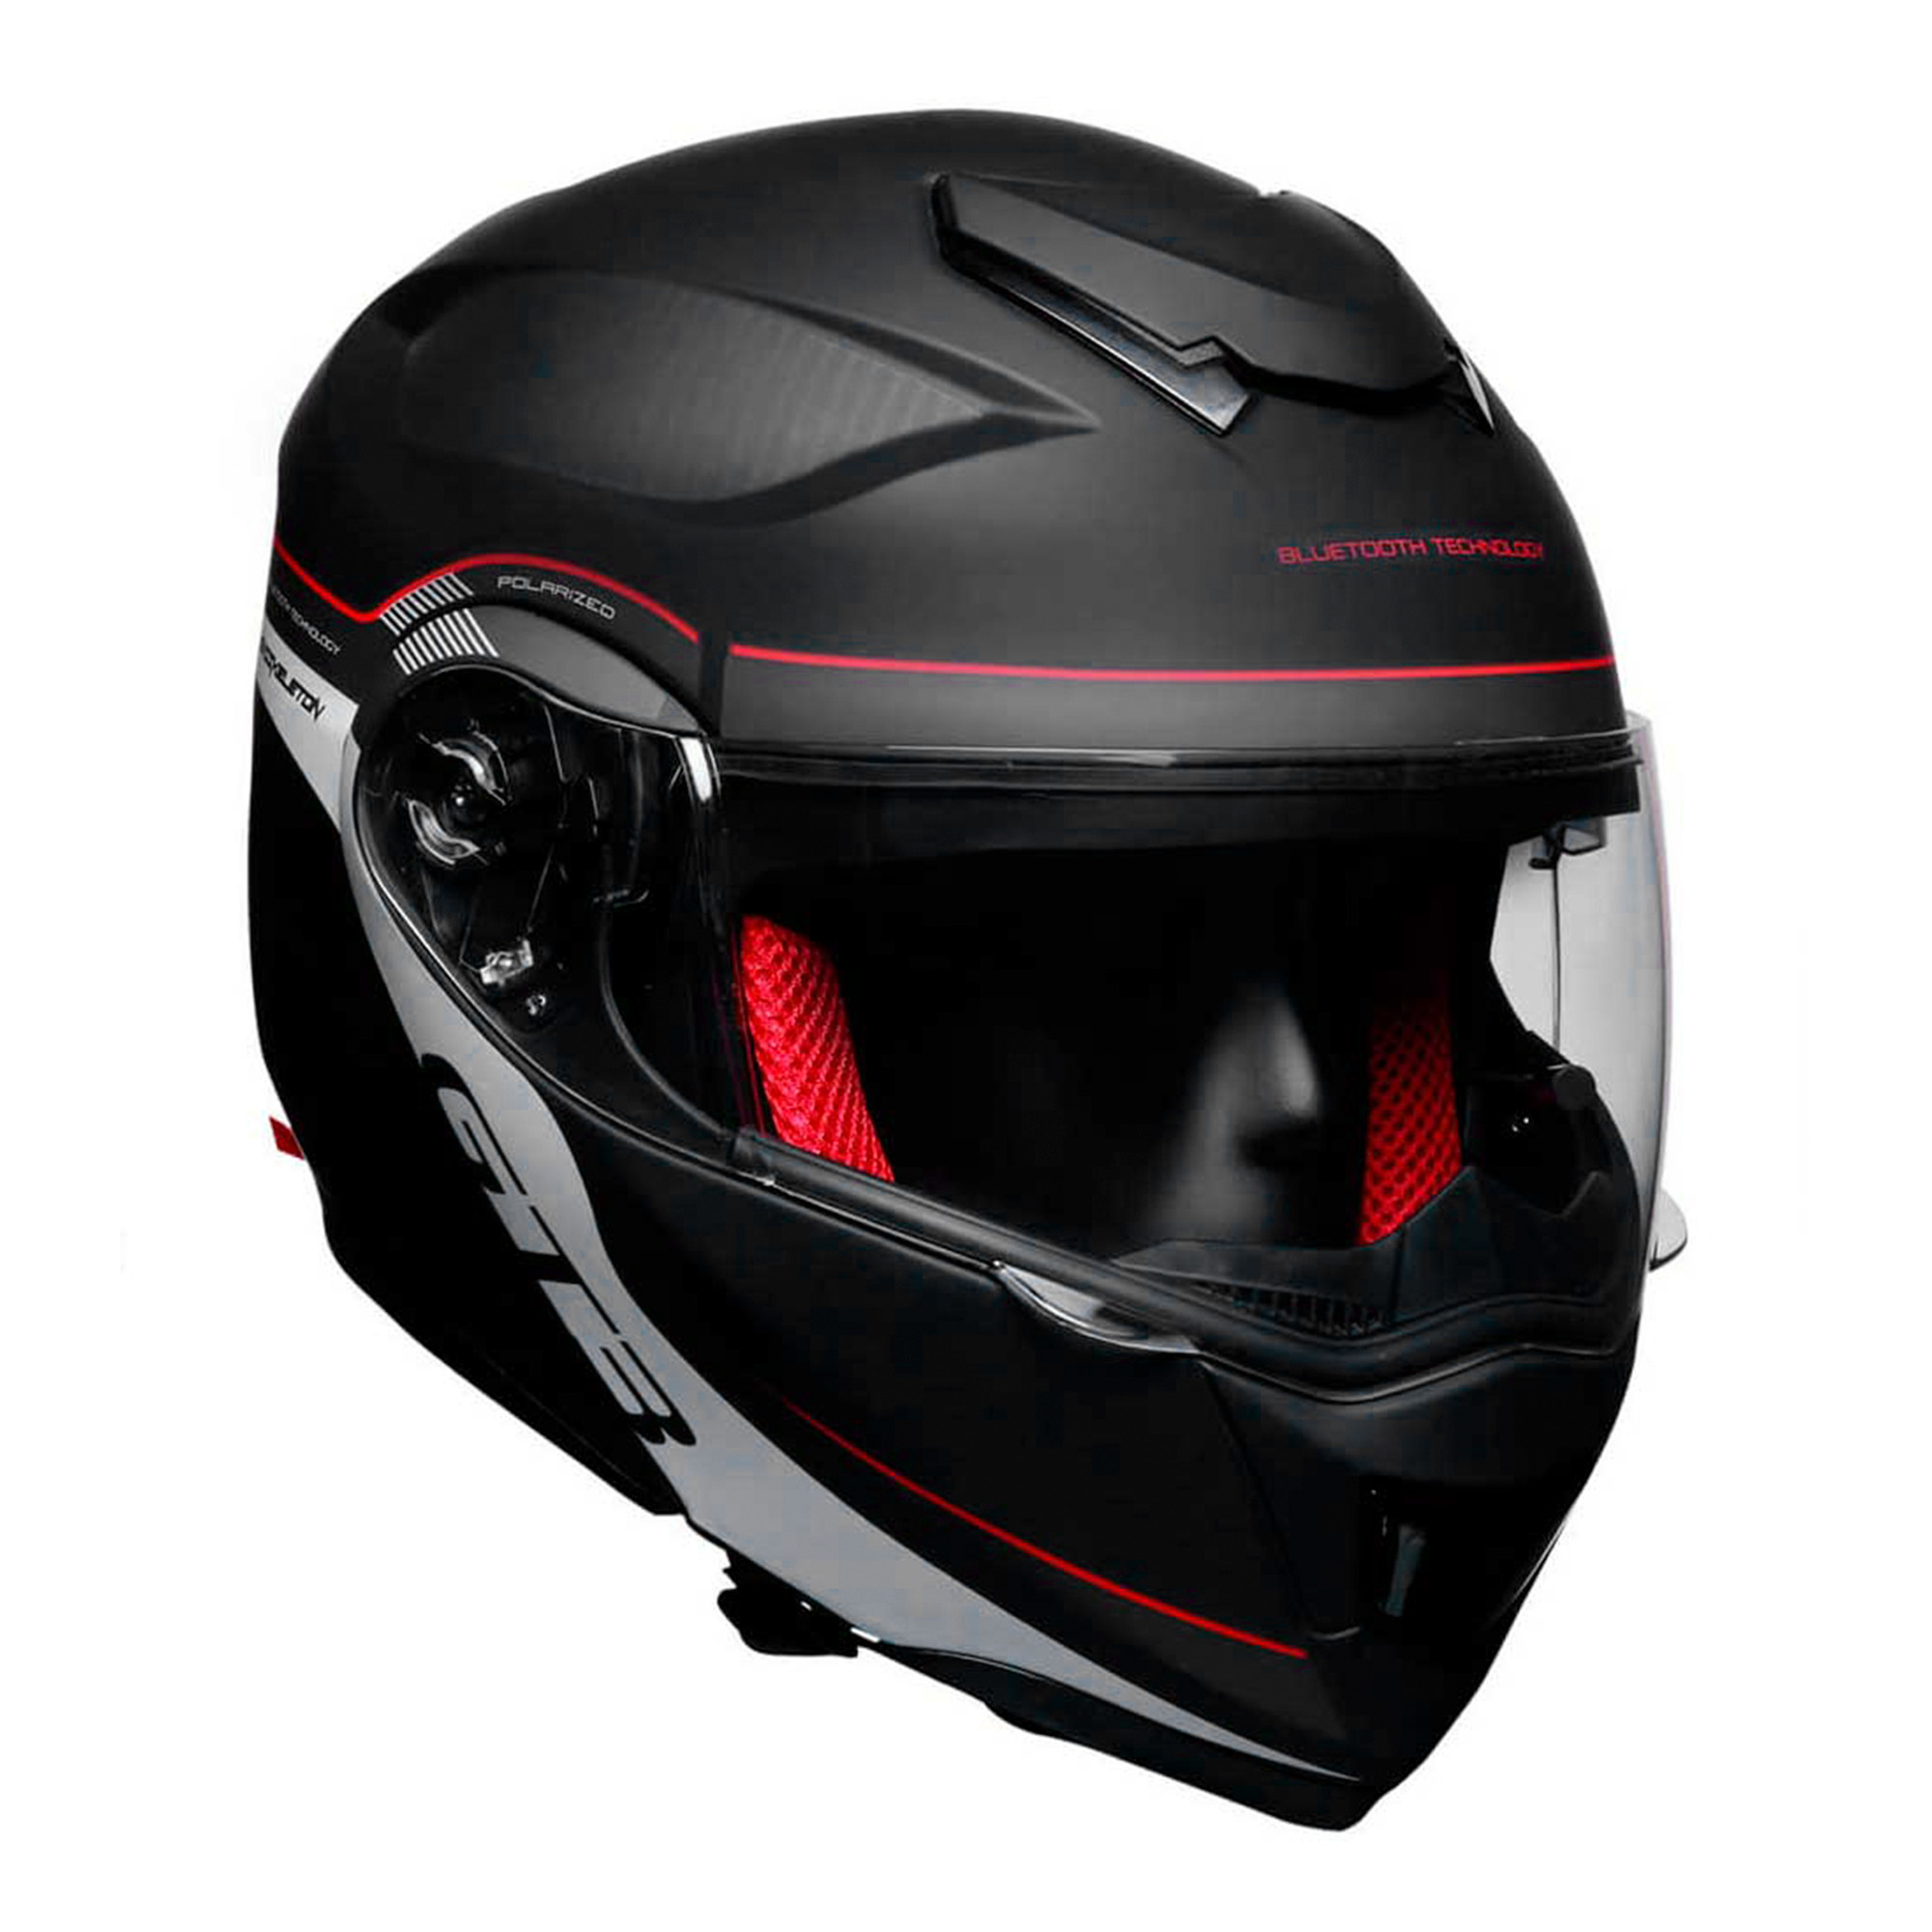  Casco de motocicleta Bluetooth, color negro (pequeño) :  Automotriz